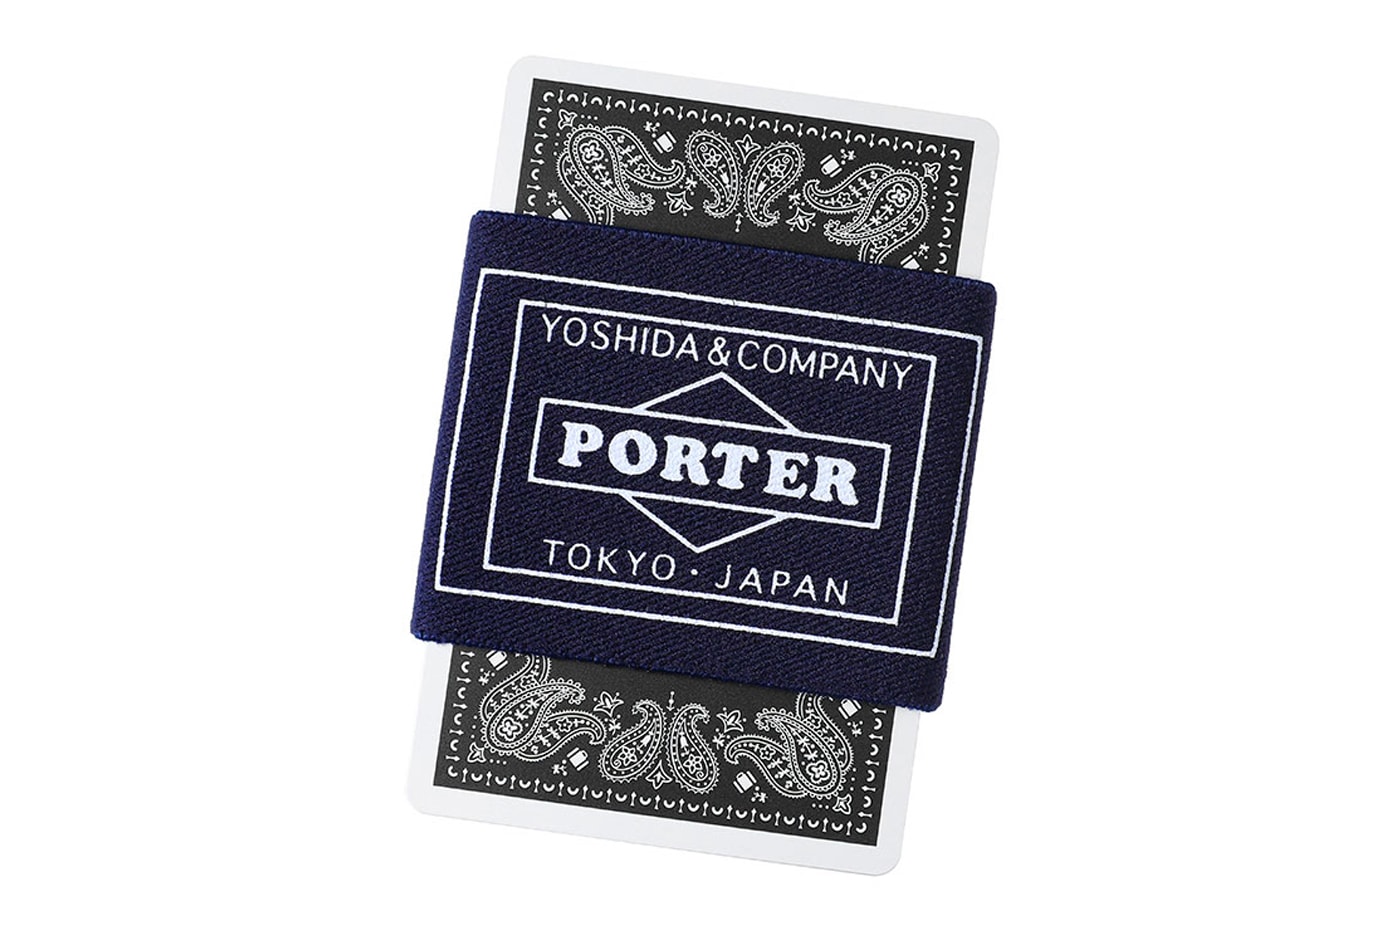 Nintendo Bespoke PORTER PLAYING CARDS Info games japanese Yoshida & Co vintage black orange olive retro Japan poker 